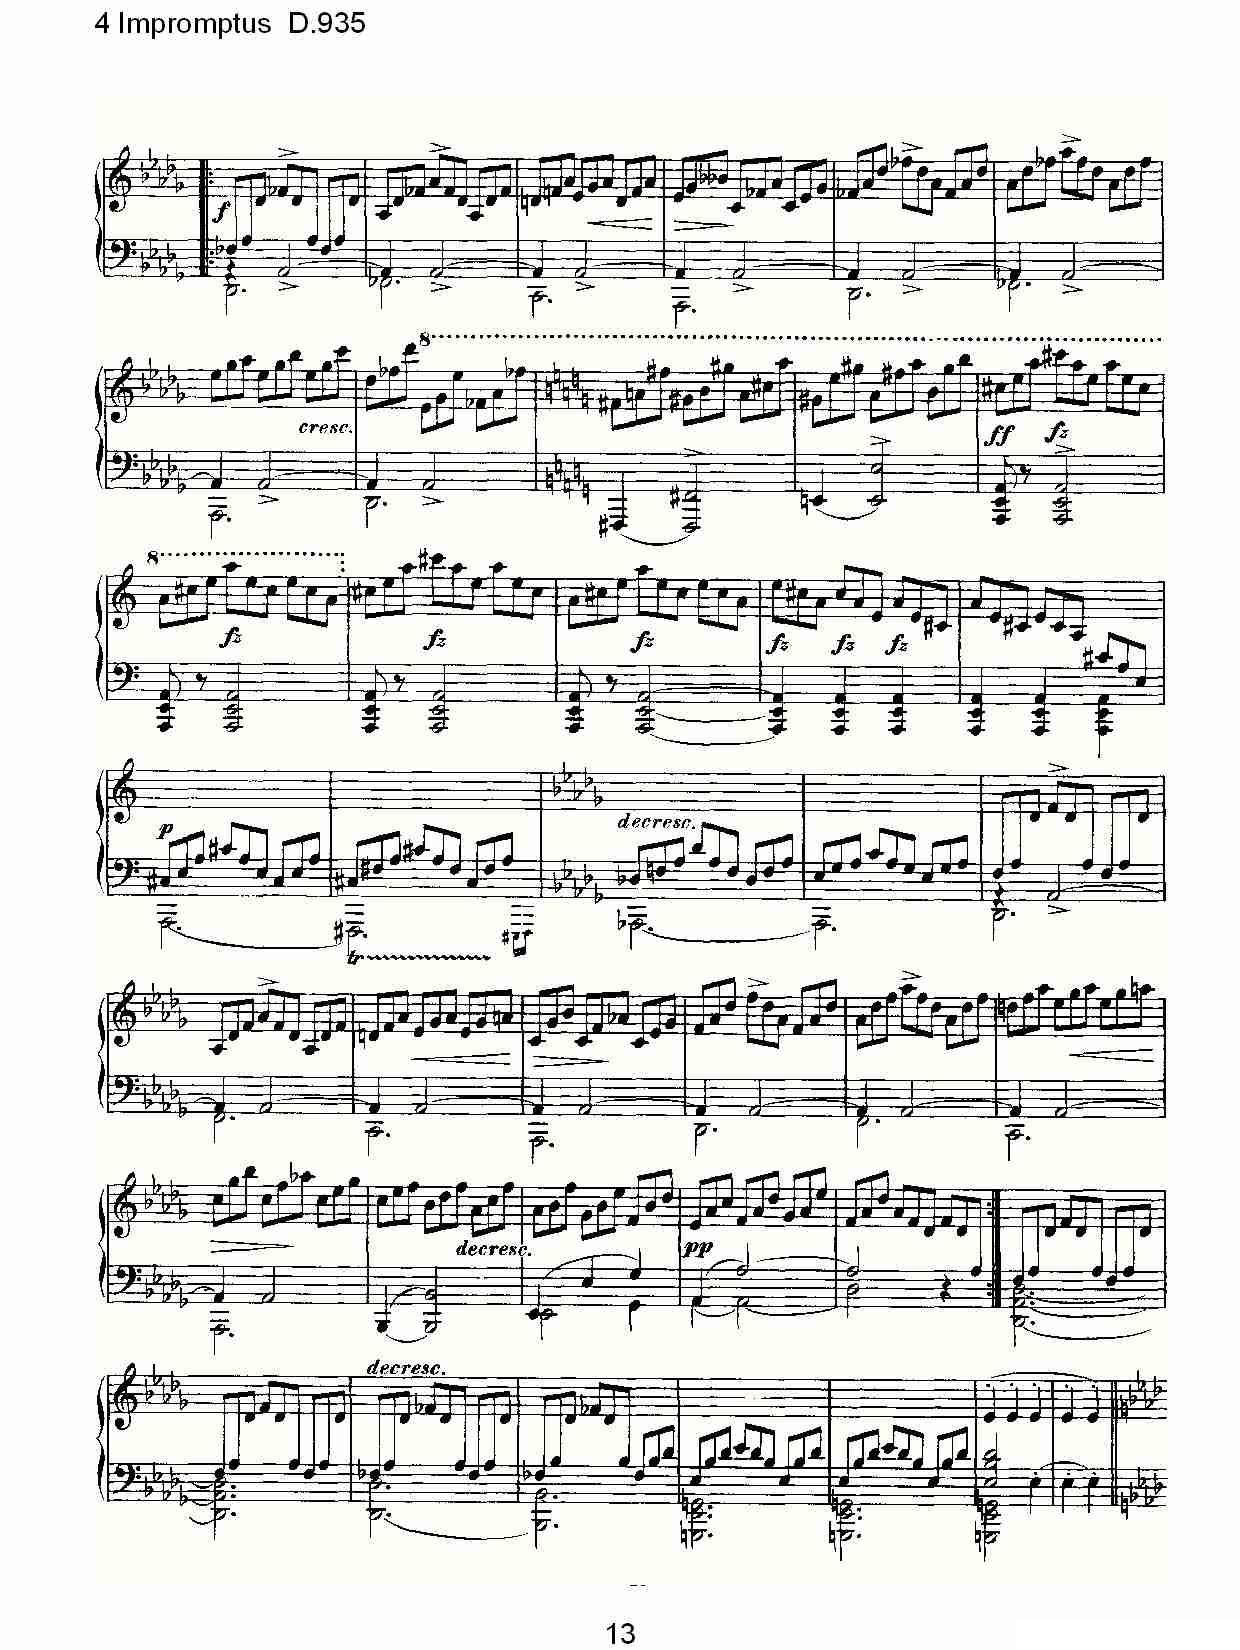 4 Impromptus D.935（4人即兴演奏D.935）钢琴曲谱（图13）